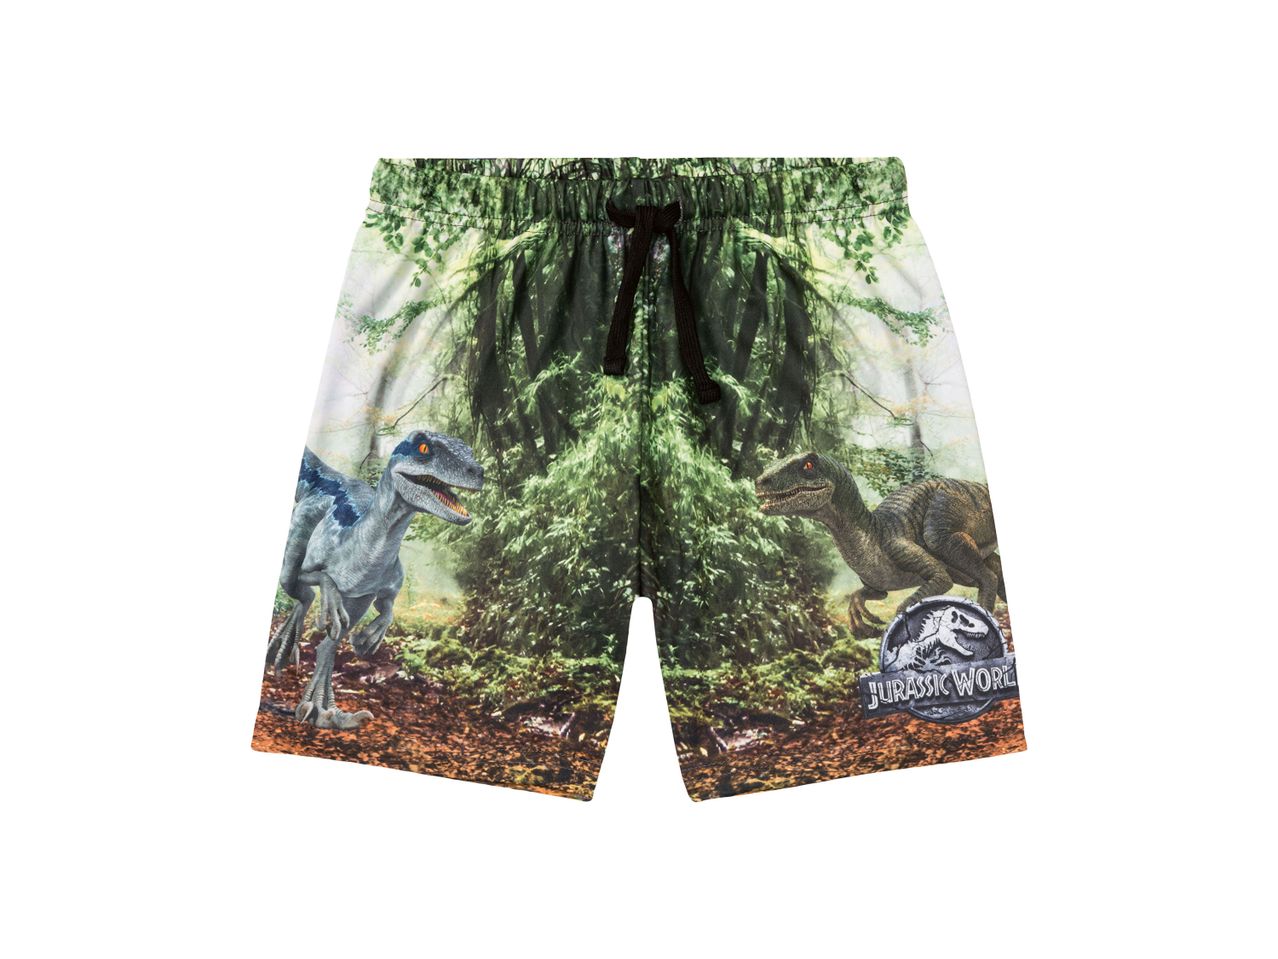 Shorts da bambino Paw Patrol, Jurassic , prezzo 4.99 EUR